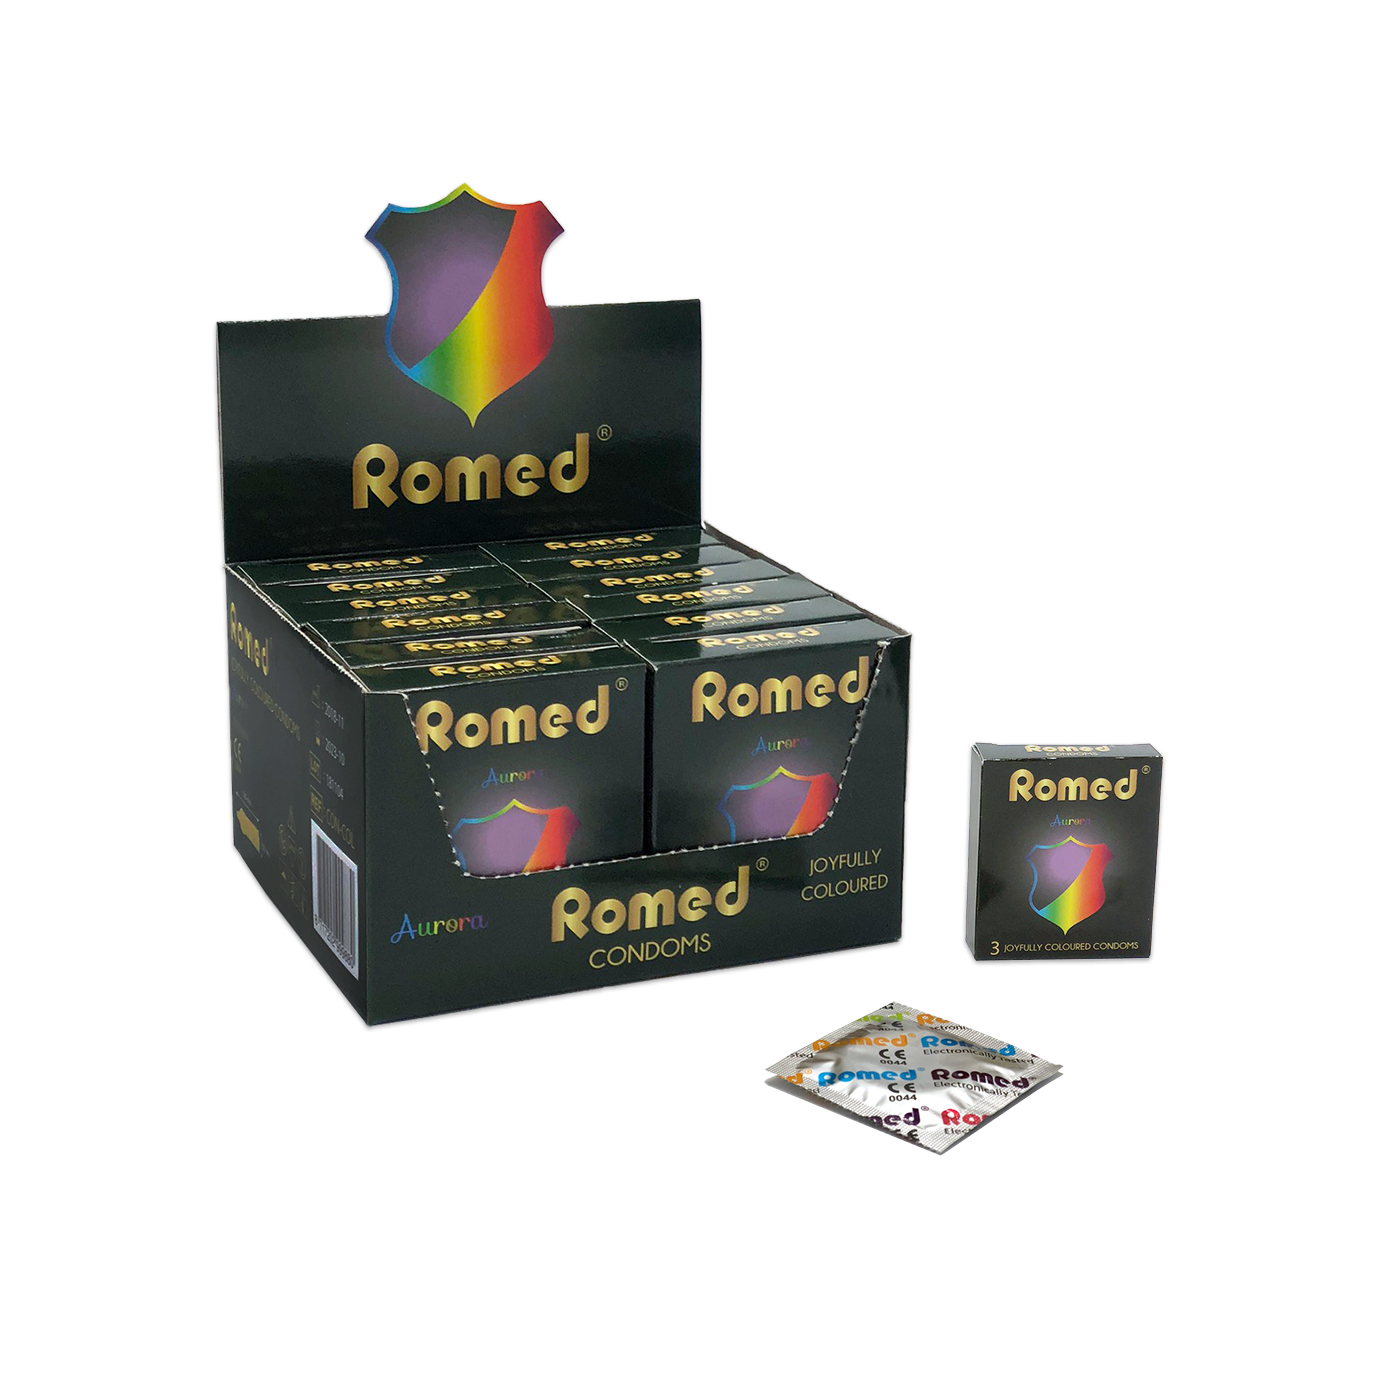 CON-COL Preservativos Romed, coloridos, embalados à un. em folha (quadrada), 3 un. numa pequena caixa, 12 x 3 un. = 36 un. por caixa de envio pronta para prateleira, 4 x 36 un. = 144 un. por caixa interna (=1 por grosso), 30 x 144 un. = 4320 un. por caixa de envio.